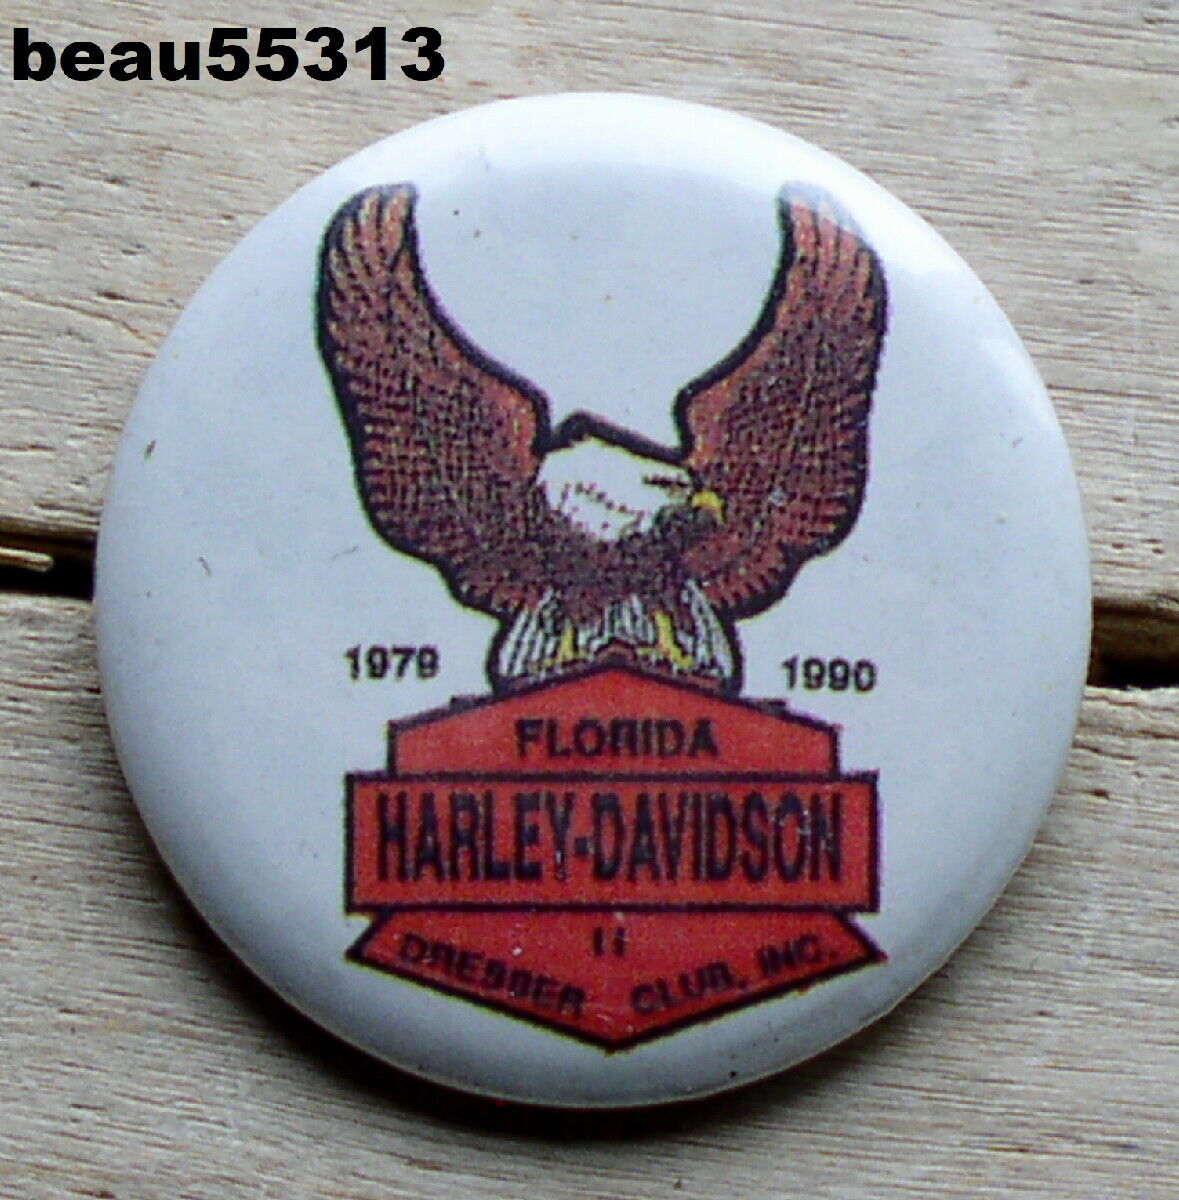 ⭐1979-1990 HARLEY DAVIDSON FLORIDA DRESSER CLUB MEMBER VEST PIN BUTTON